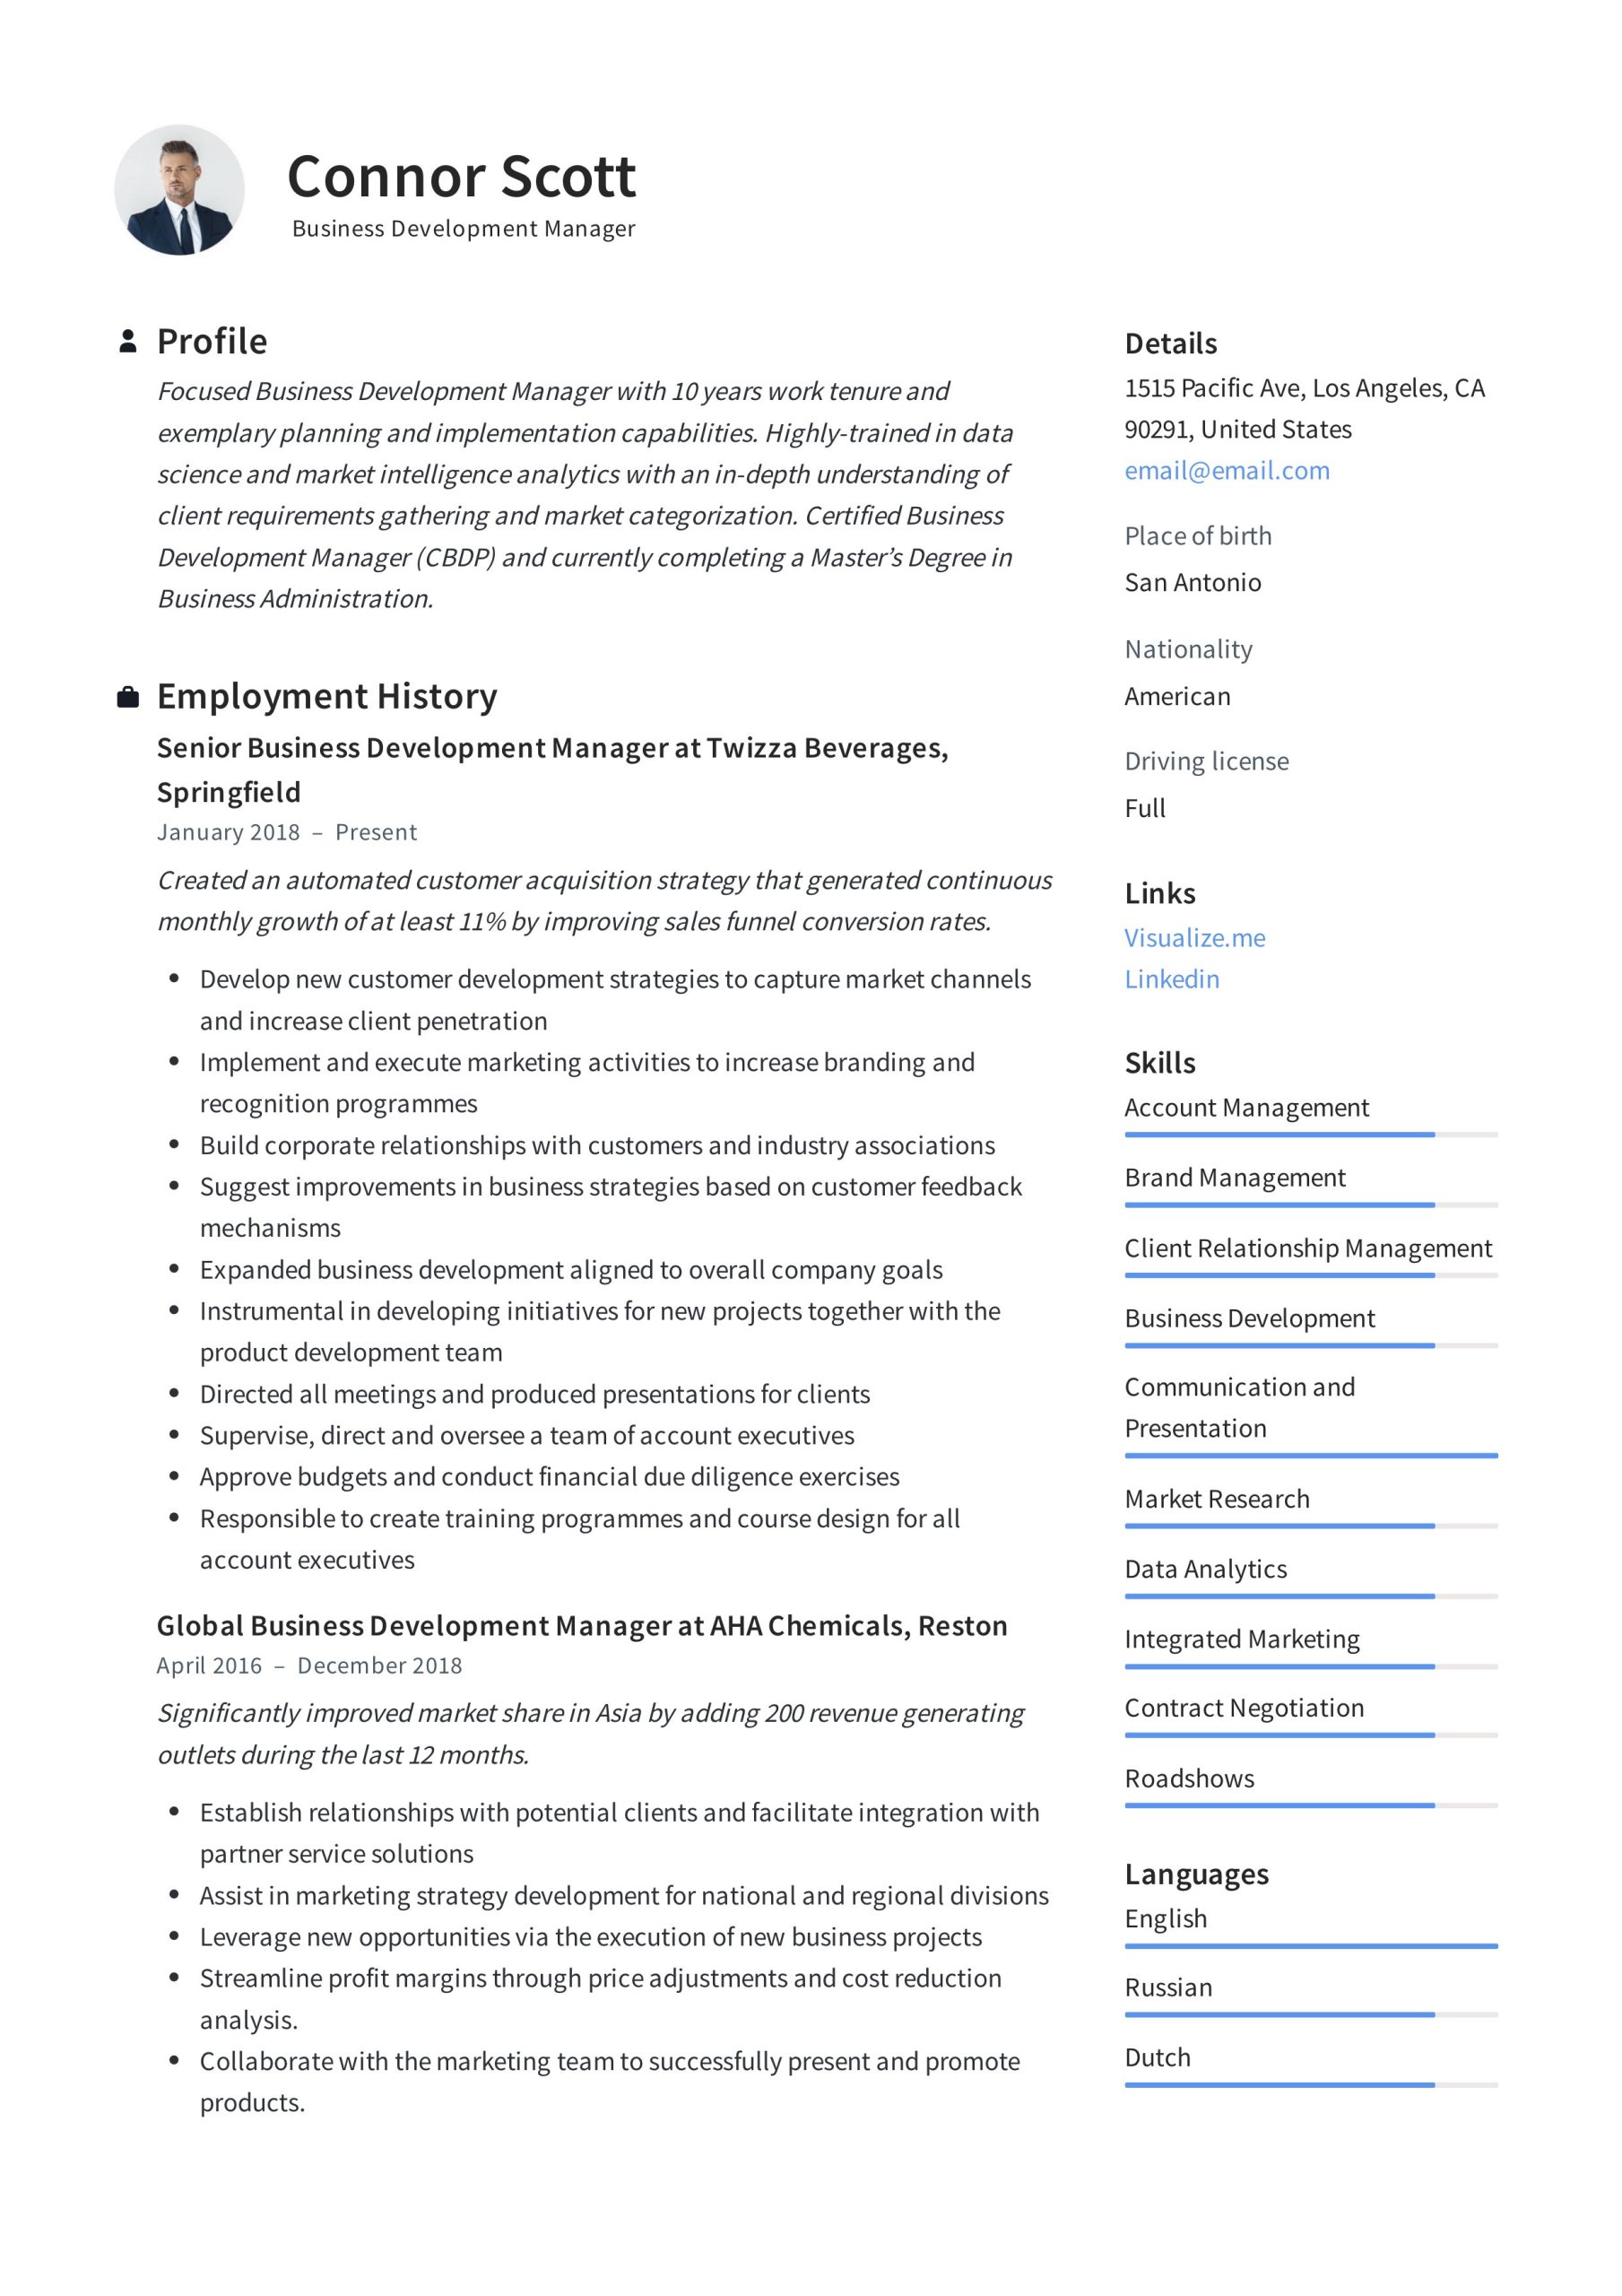 Business Development Technical Sales Resume Sample Business Development Manager Resume & Guide 2022